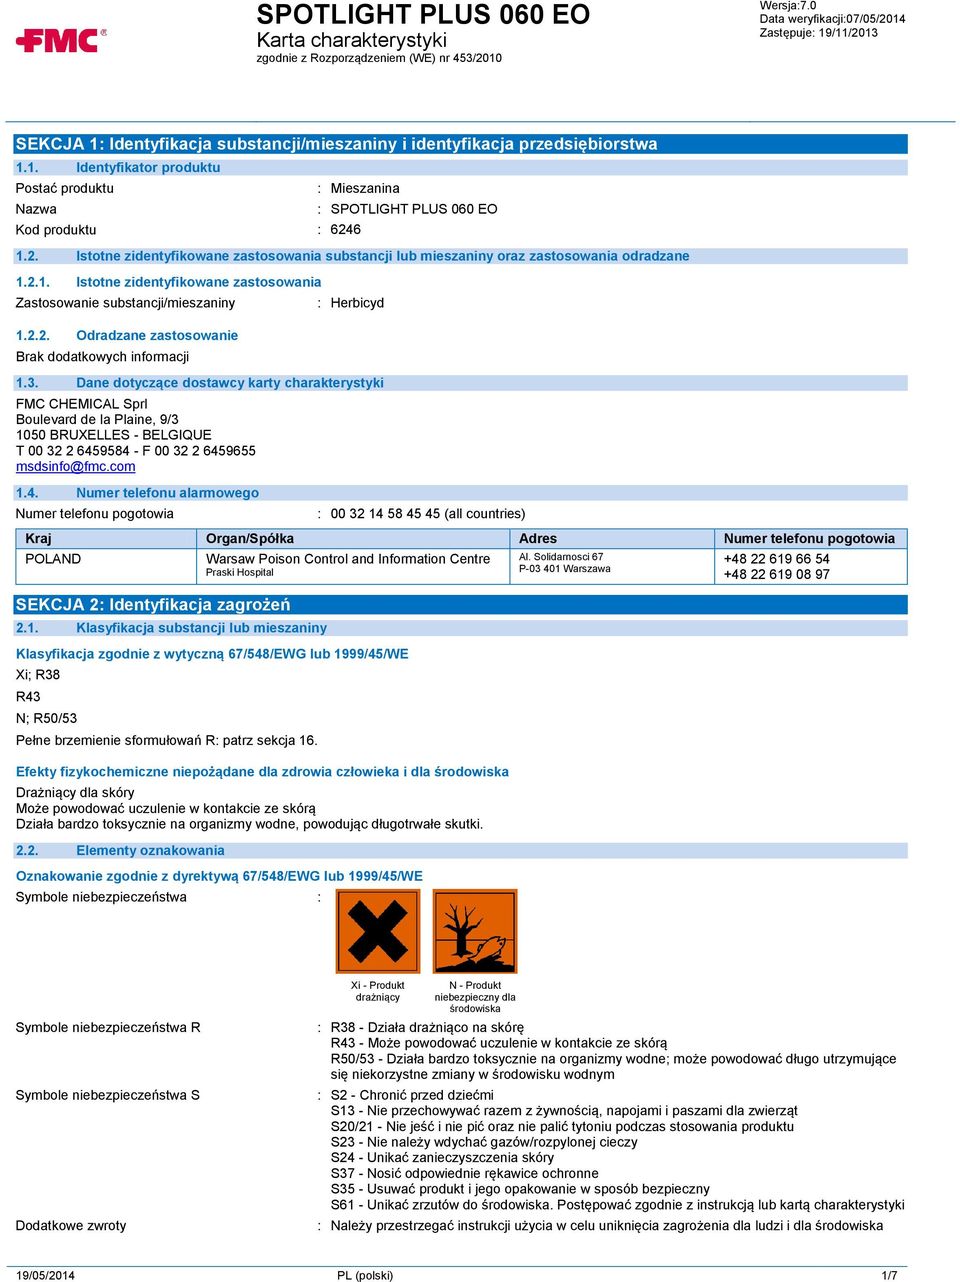 3. Dane dotyczące dostawcy karty charakterystyki FMC CHEMICAL Sprl Boulevard de la Plaine, 9/3 1050 BRUXELLES - BELGIQUE T 00 32 2 645